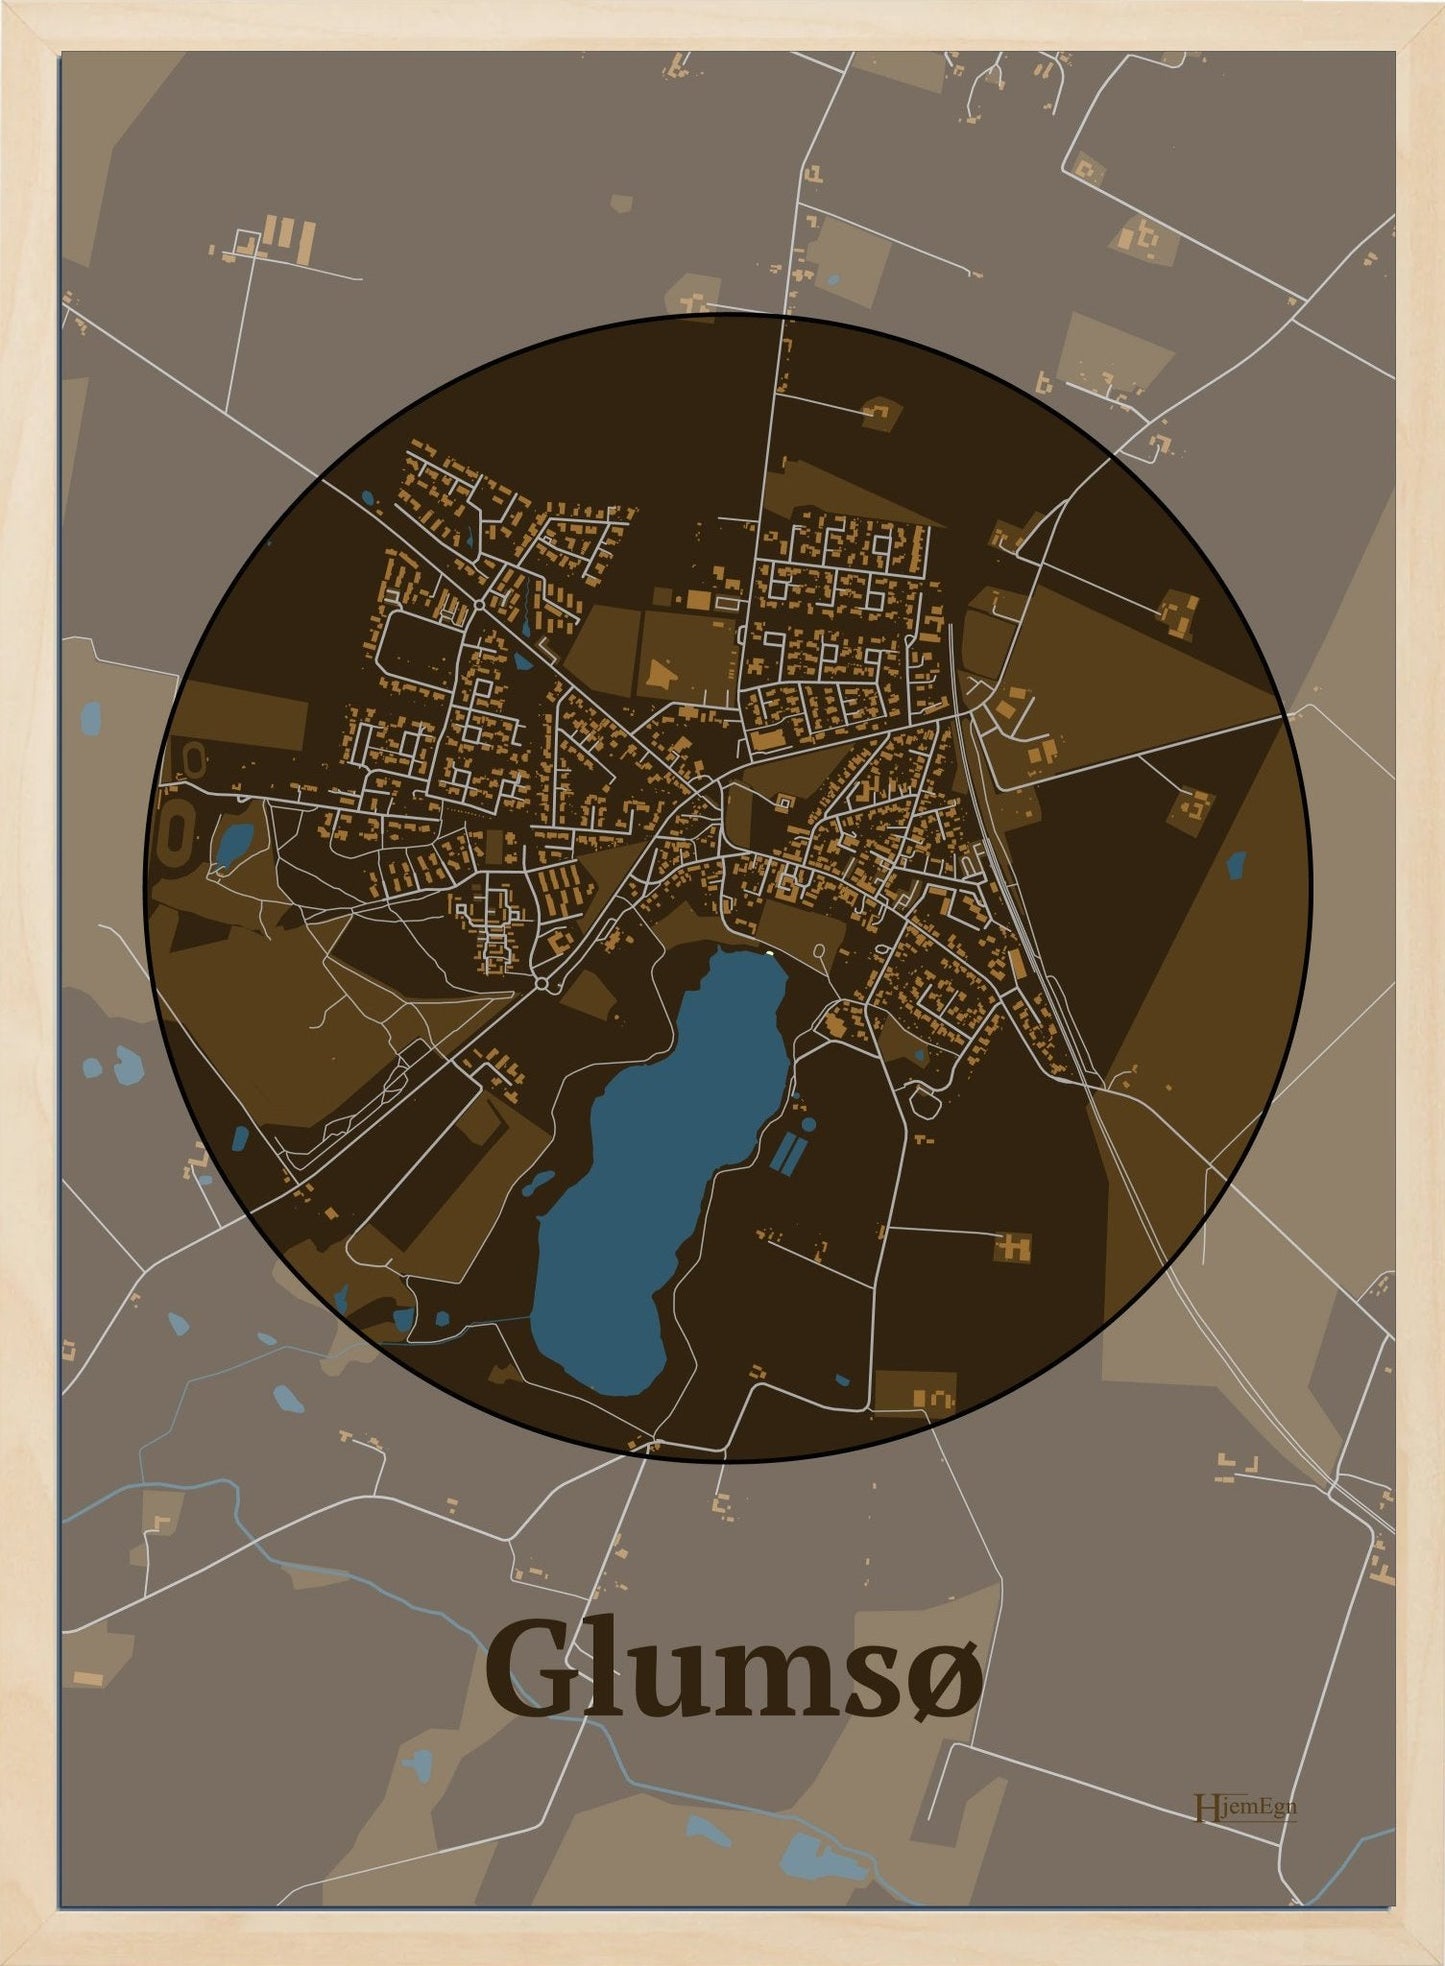 Glumsø plakat i farve mørk brun og HjemEgn.dk design centrum. Design bykort for Glumsø